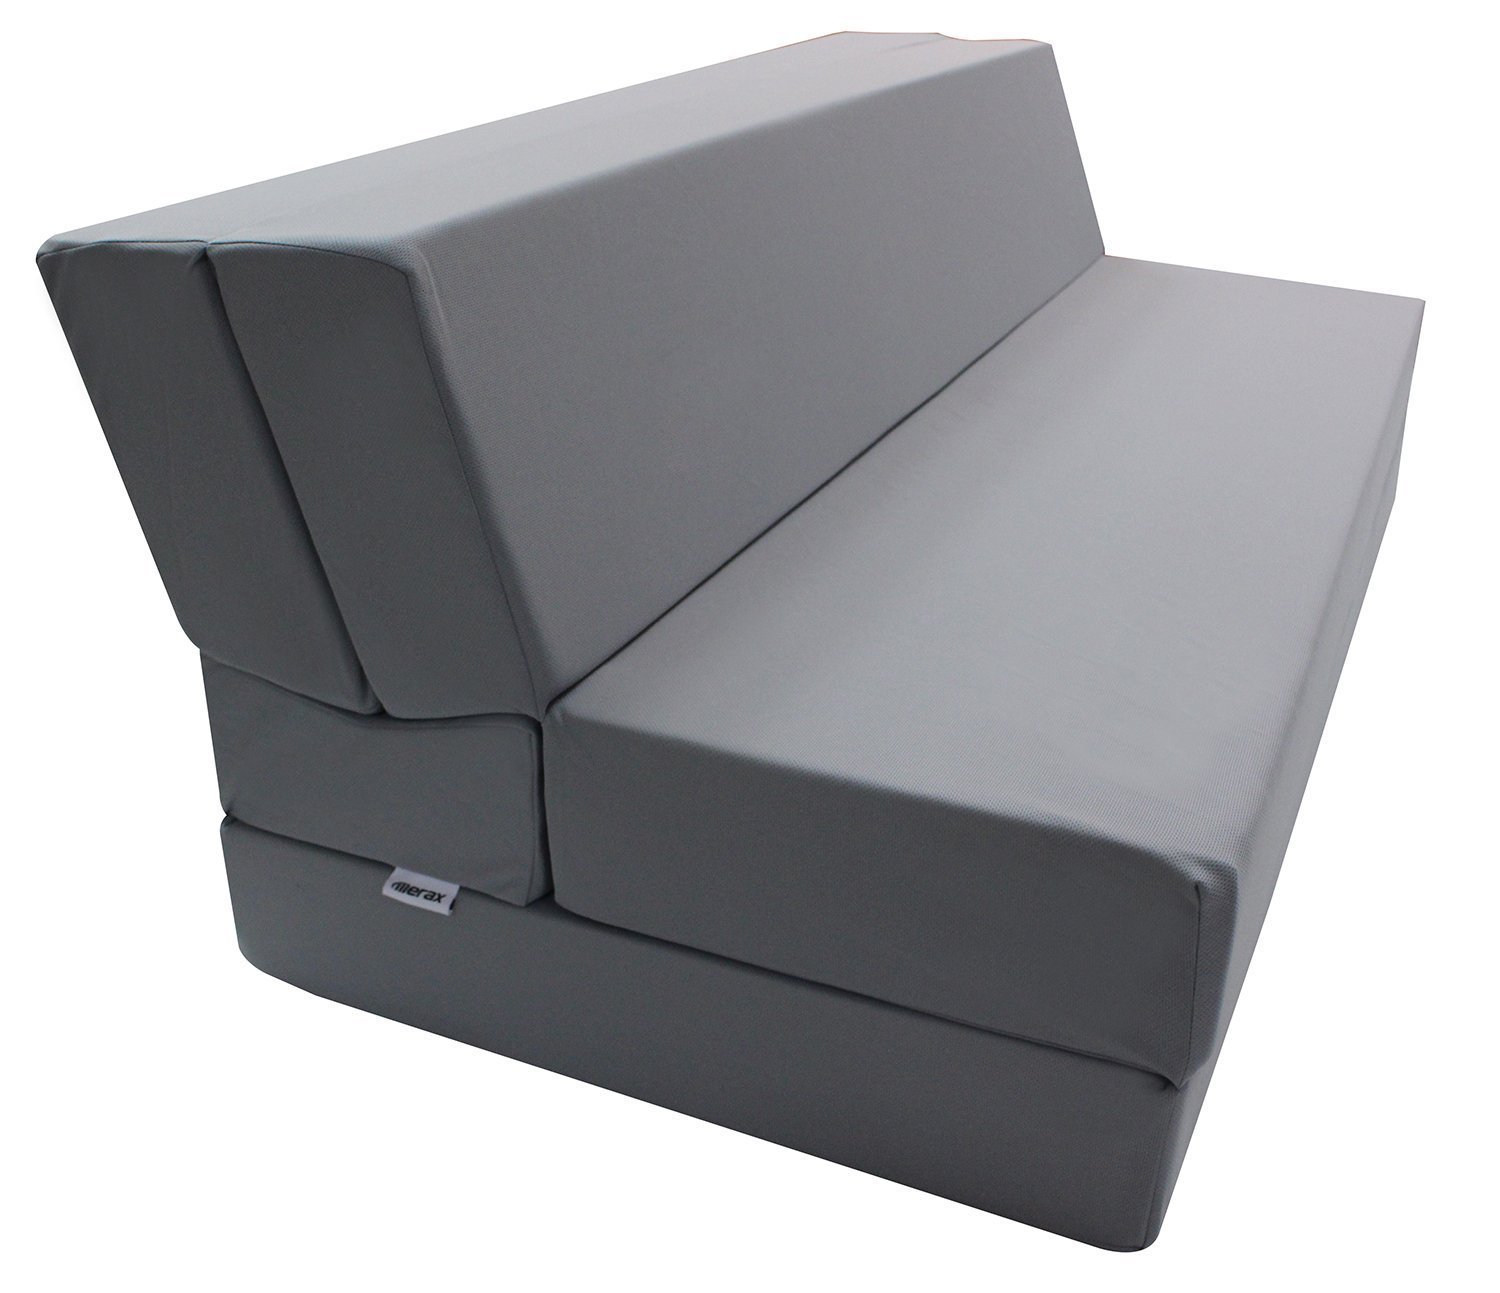 Foam sofa bed merax convertible 5-folding foam sleeping mattress sofa bed and floor  mat,gray - NVAZUXS